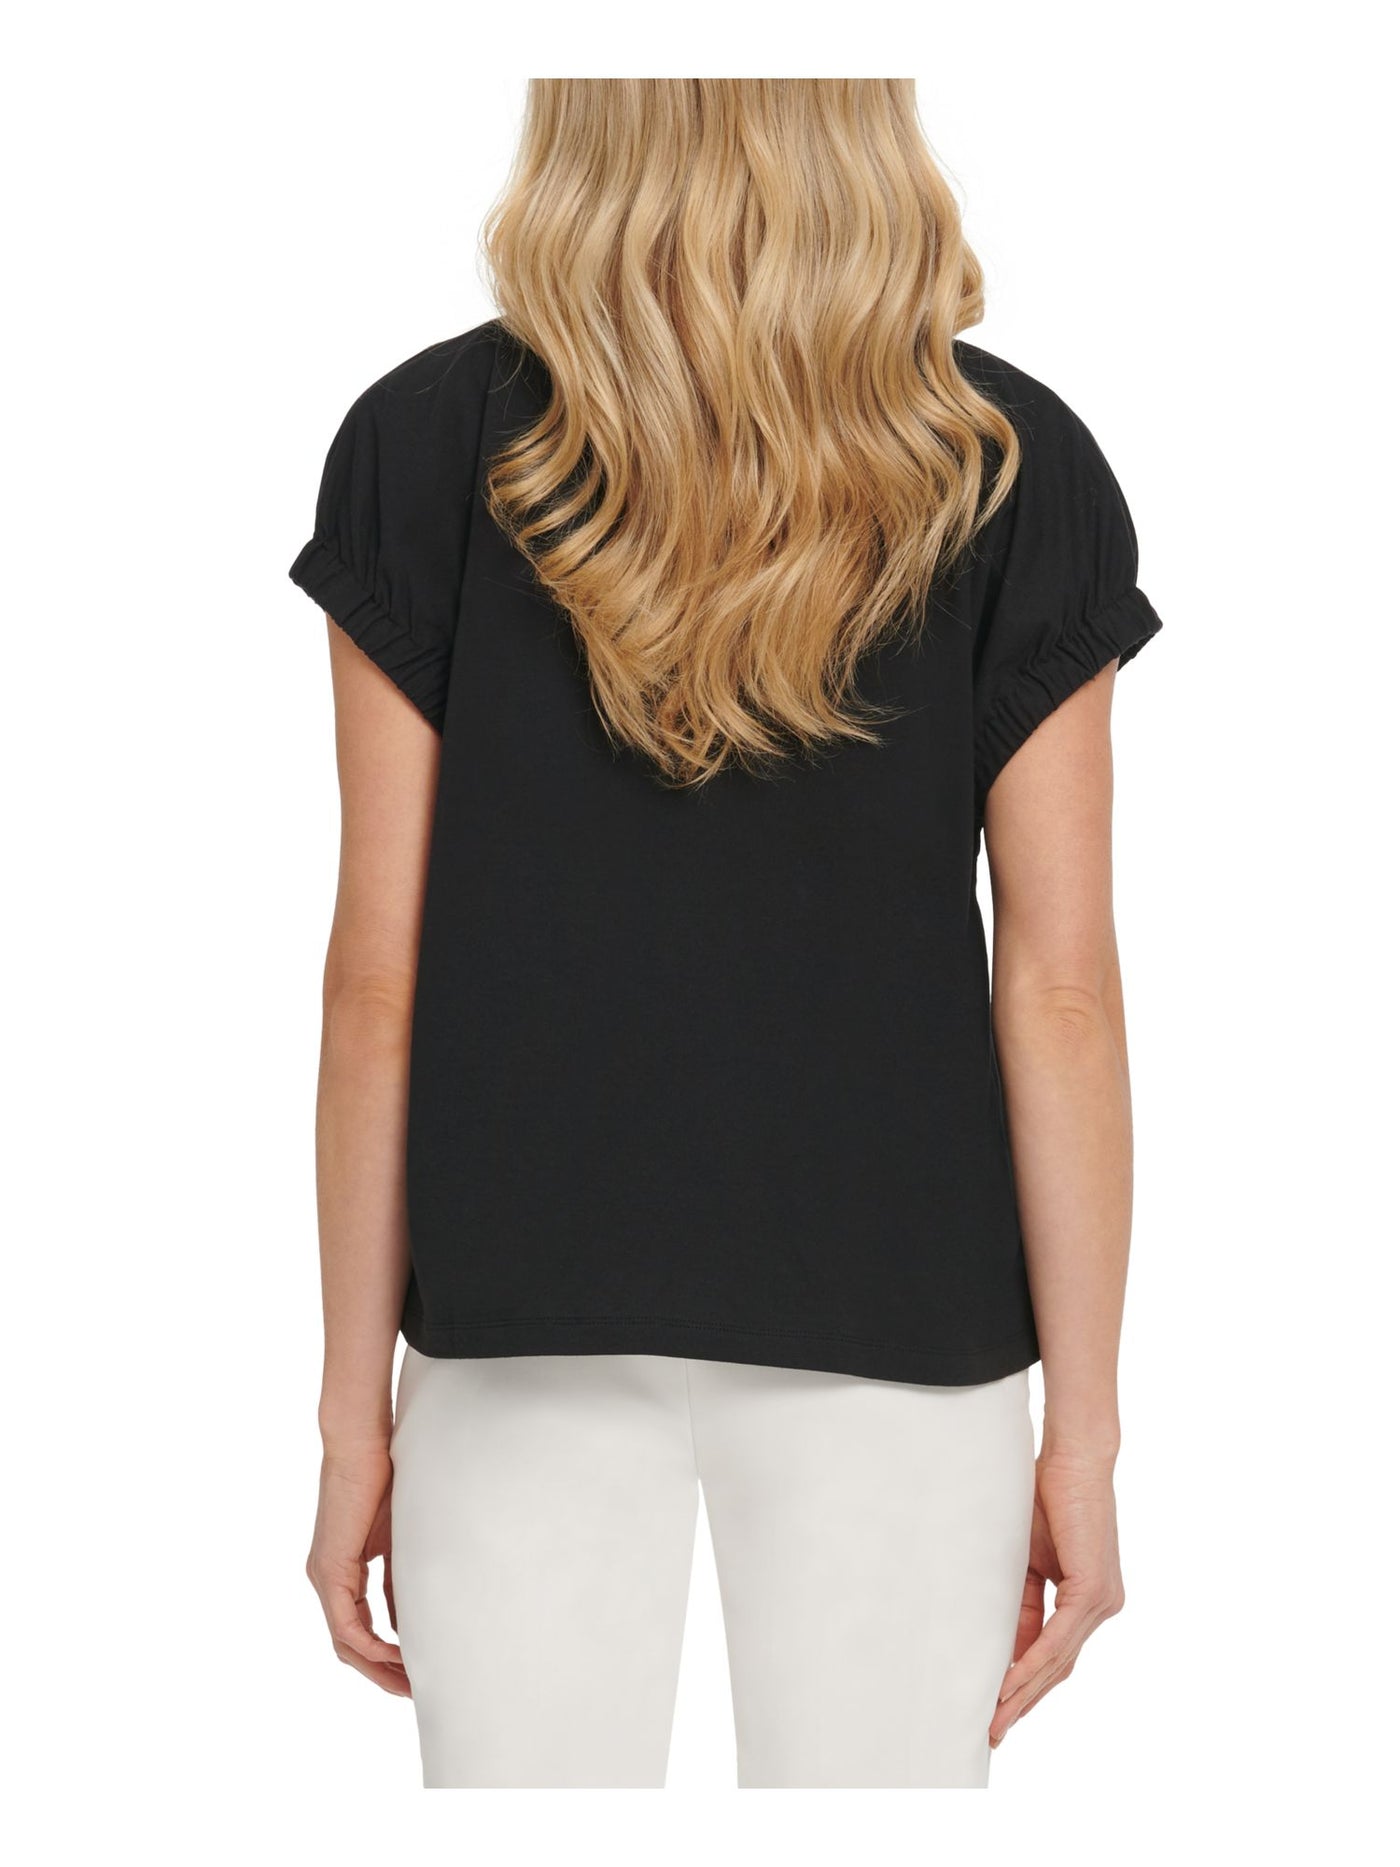 DKNY Womens Black Short Sleeve Crew Neck T-Shirt XS